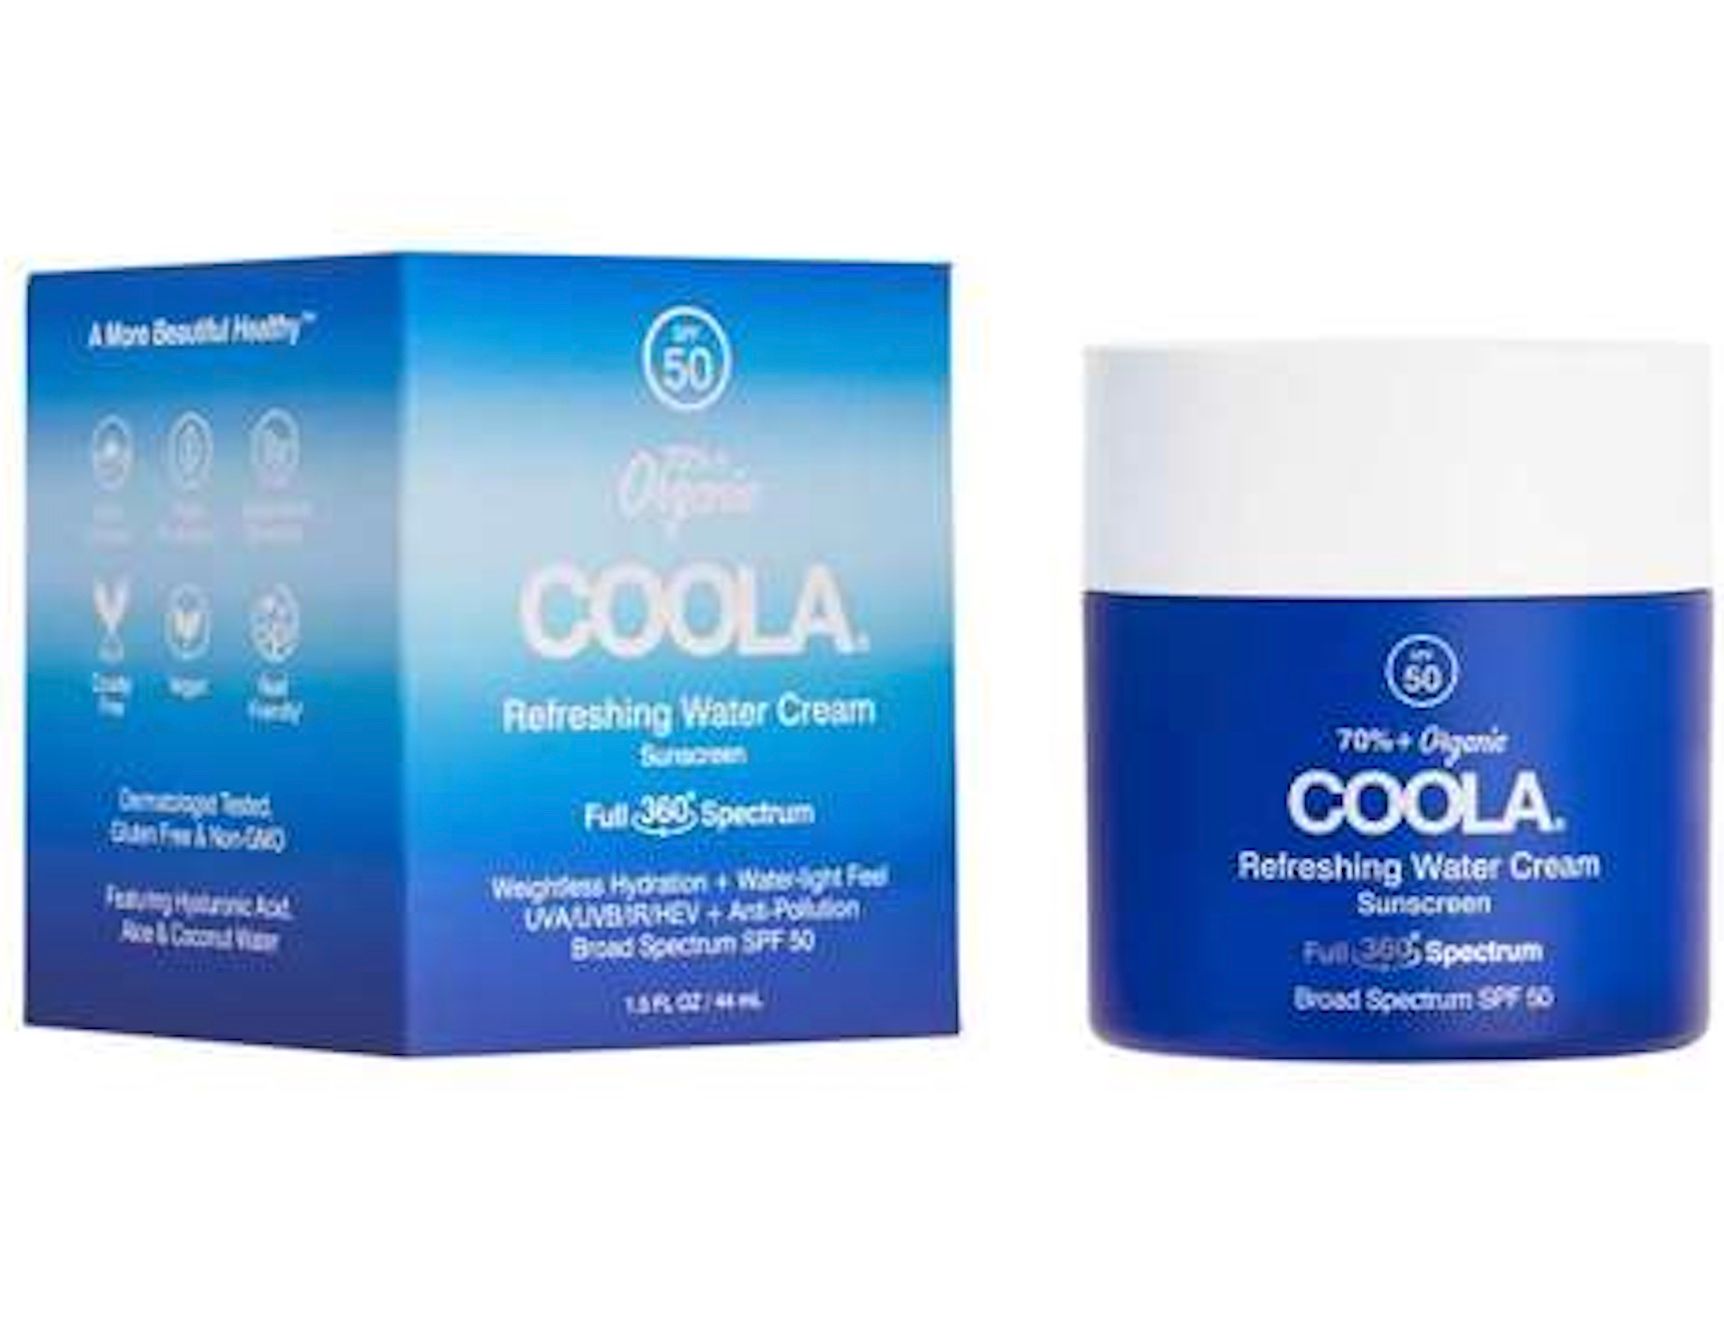 COOLA Full Spectrum 360° Refreshing Water Cream Organic Face Sunscreen, SPF 50 - 1.5 fl oz